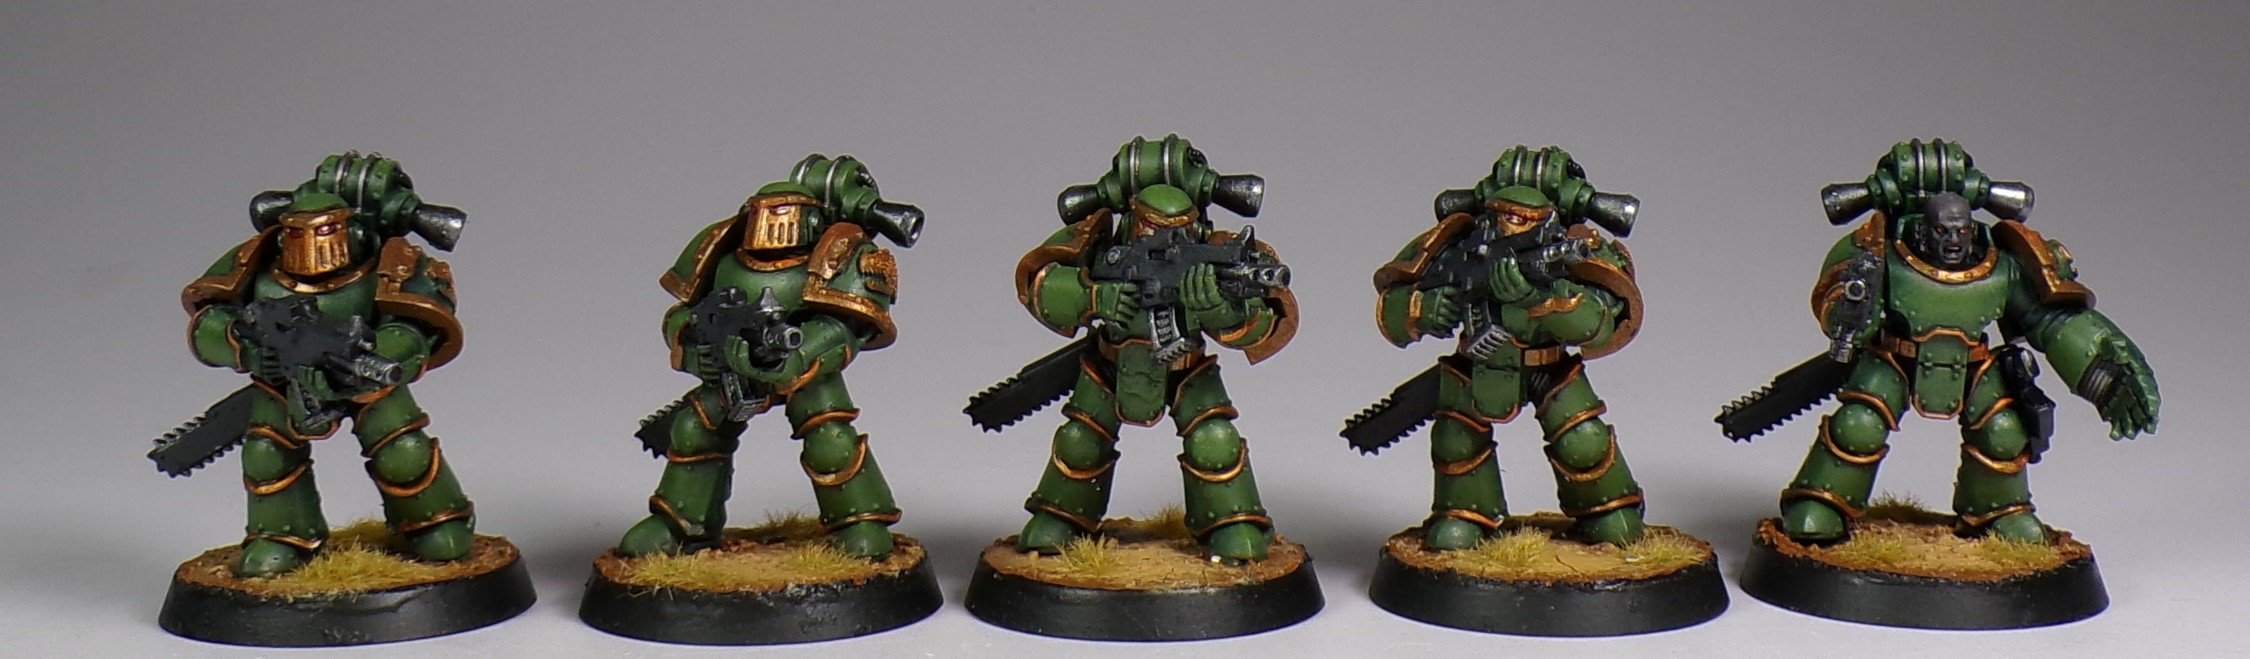 Paintedfigs Salamander Space Marines Miniature Painting Service (3).jpg